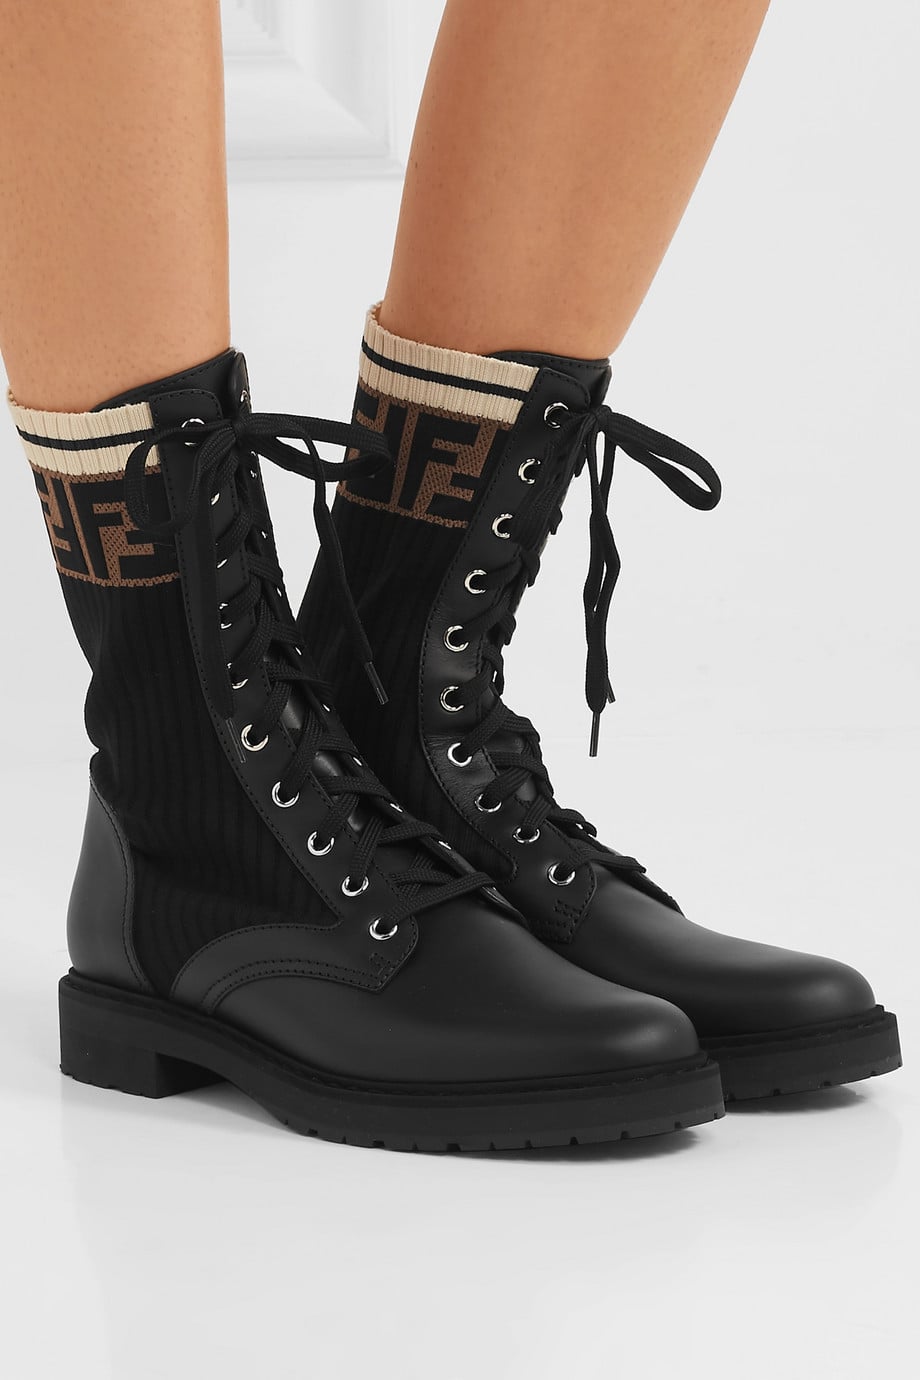 rockoko fendi boots